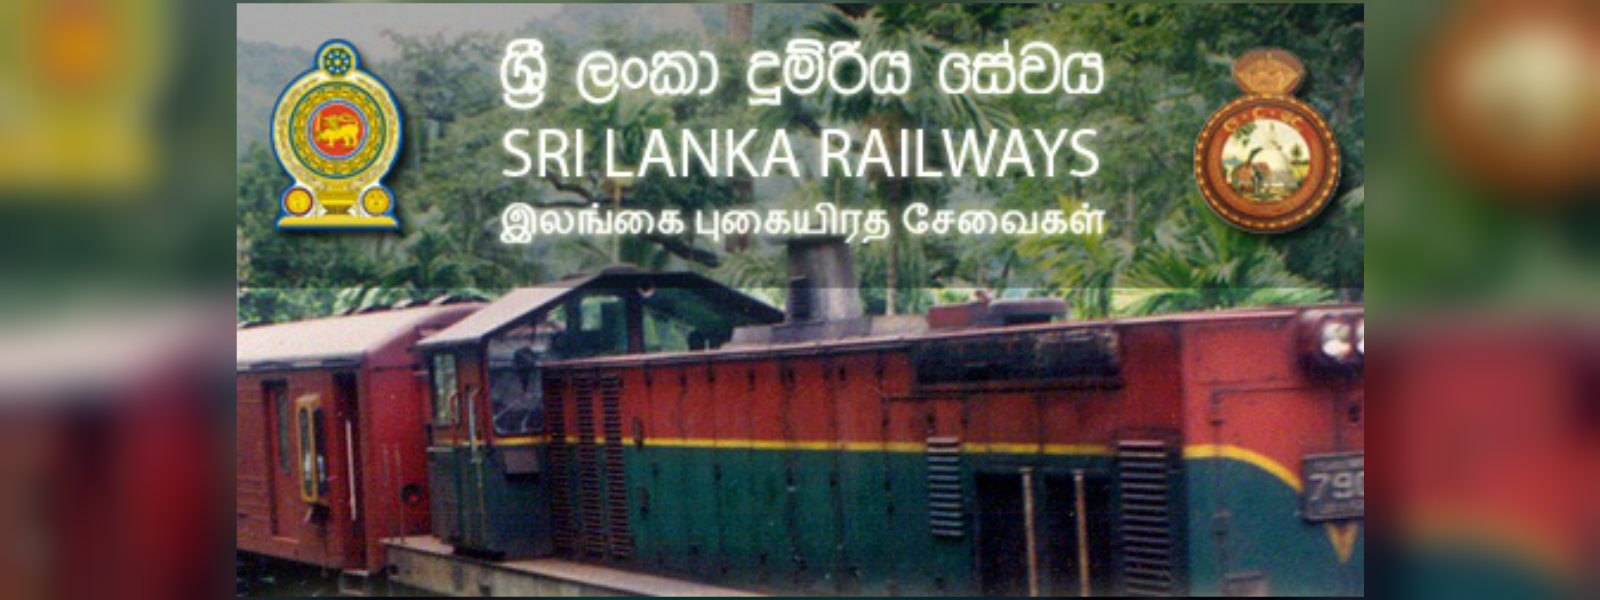 Four trains imported to transport garbage to Aruwakkalu